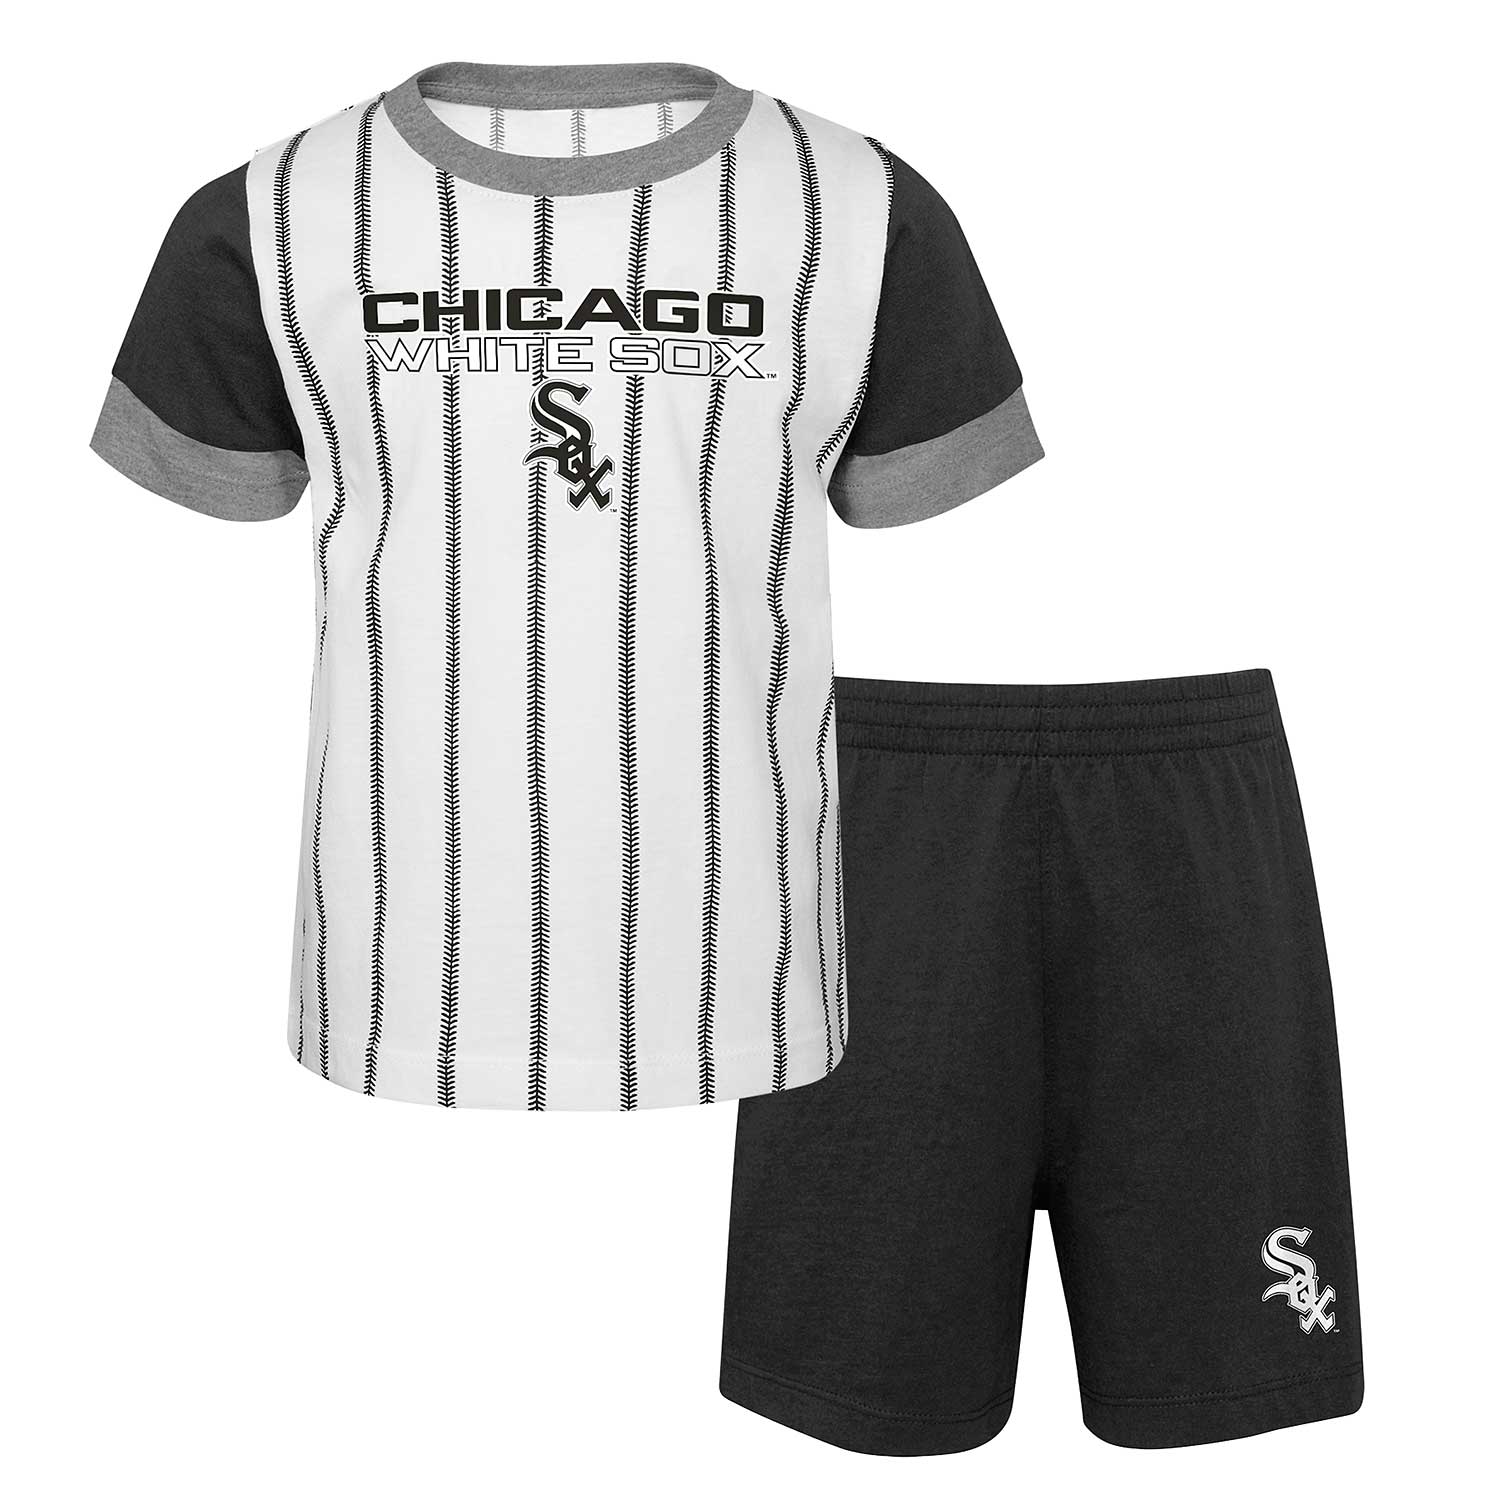 Brand New Chicao White Sox Youth Kids T-shirt Shirt MLB Child Gray